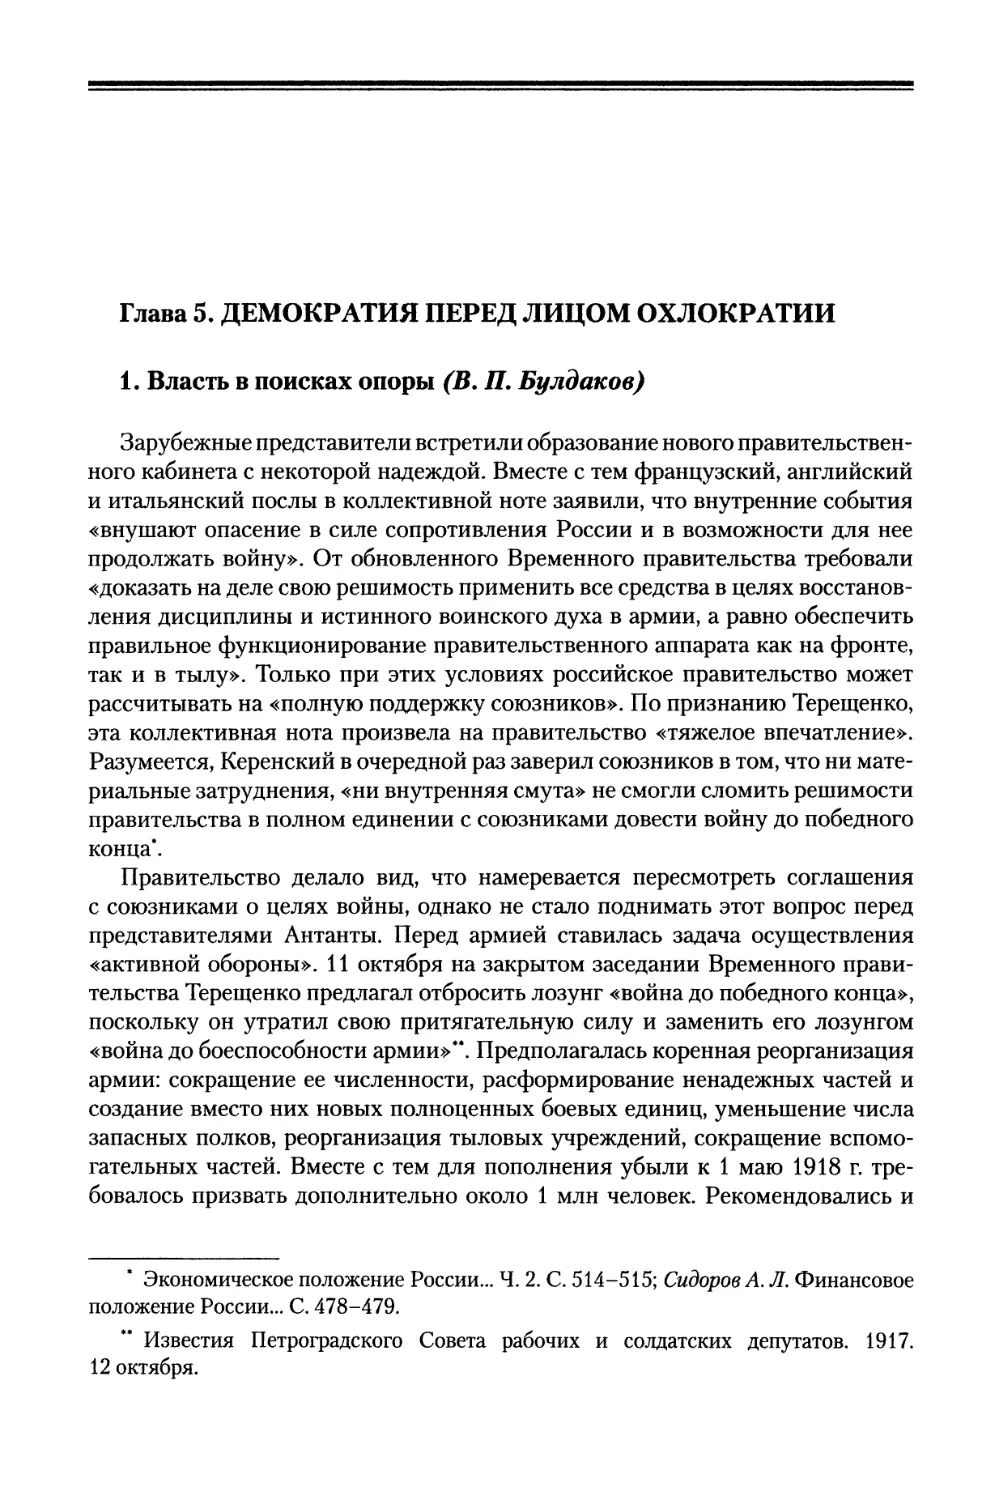 Глава 5. Демократия перед лицом охлократии
1. Власть в поисках опоры (В. П. Булдаков)